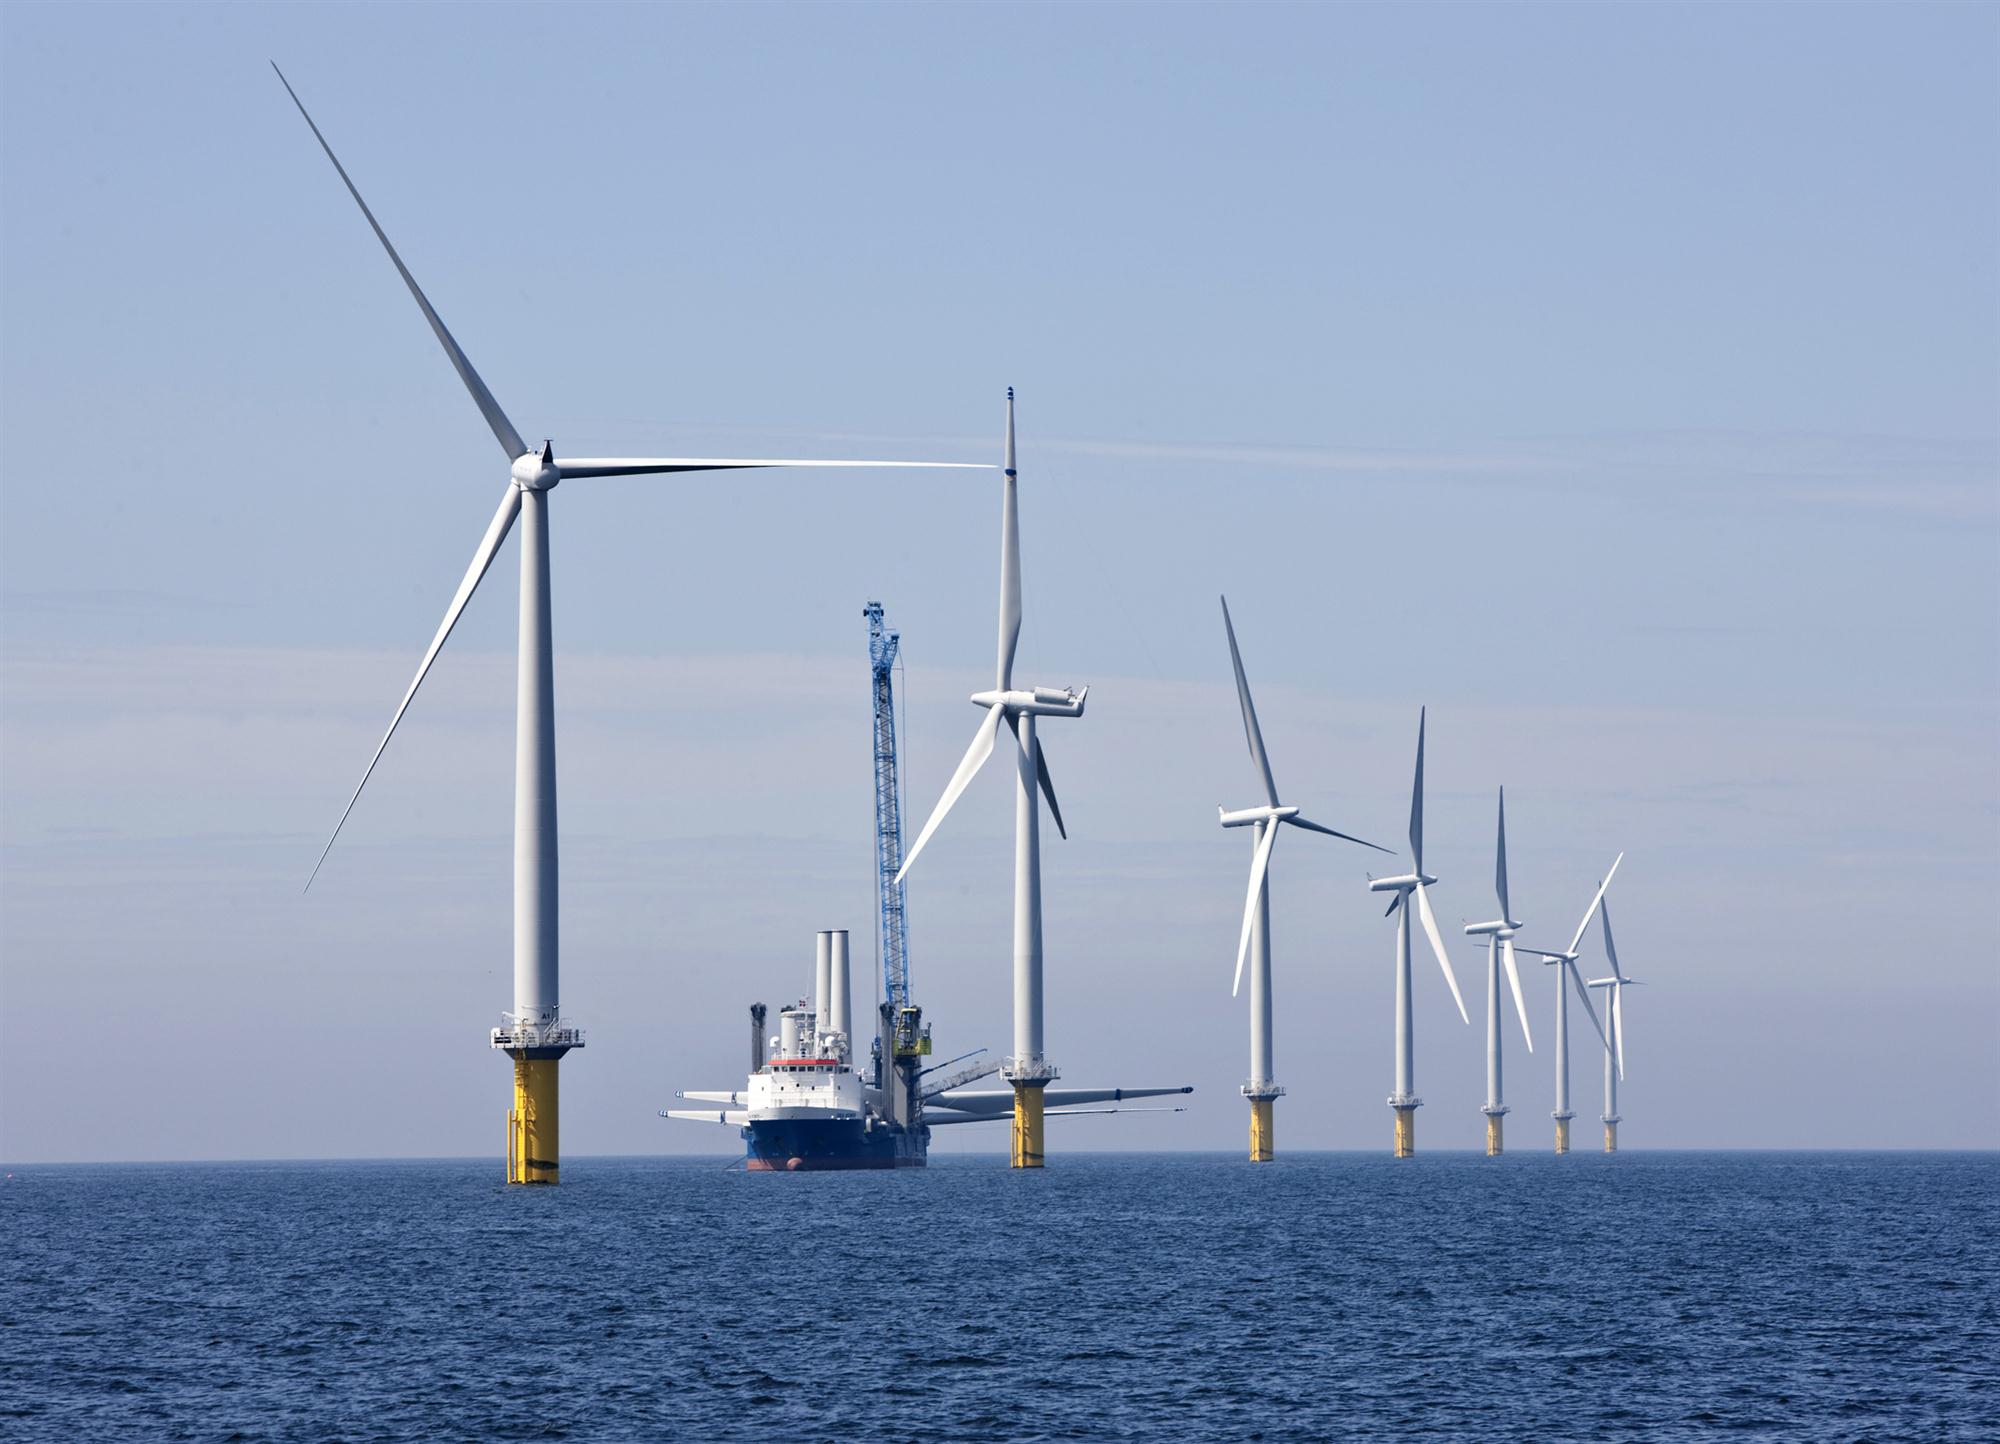 Self Photos / Files - Siemens wind turbines